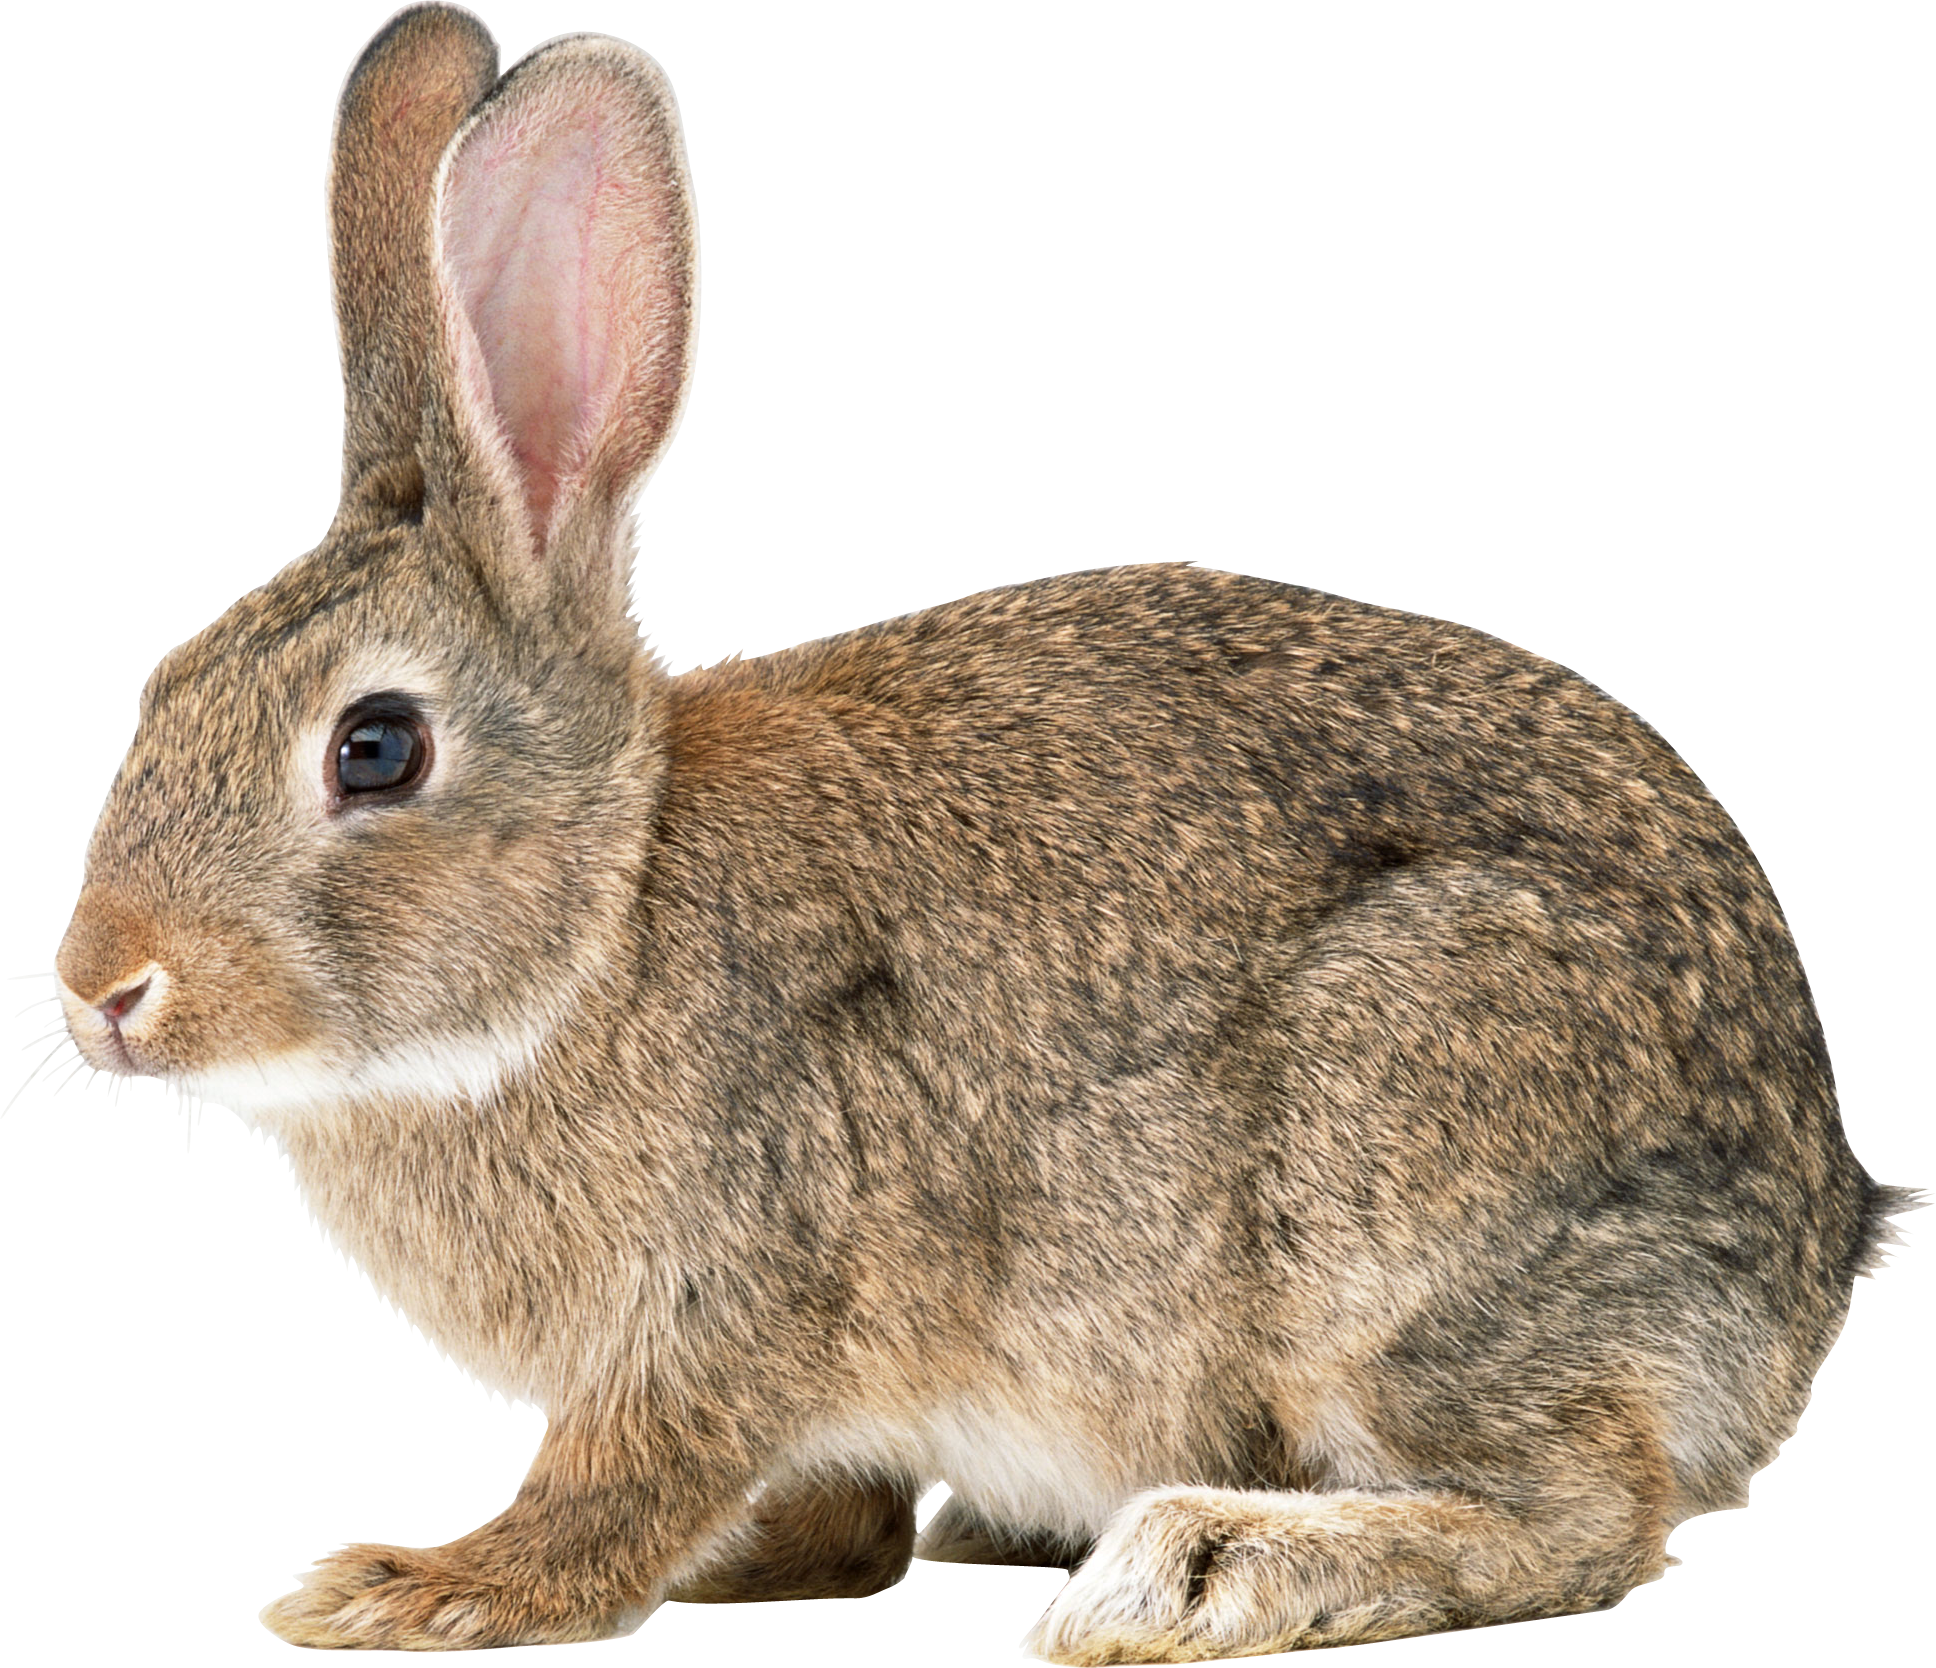 rabbit PNG